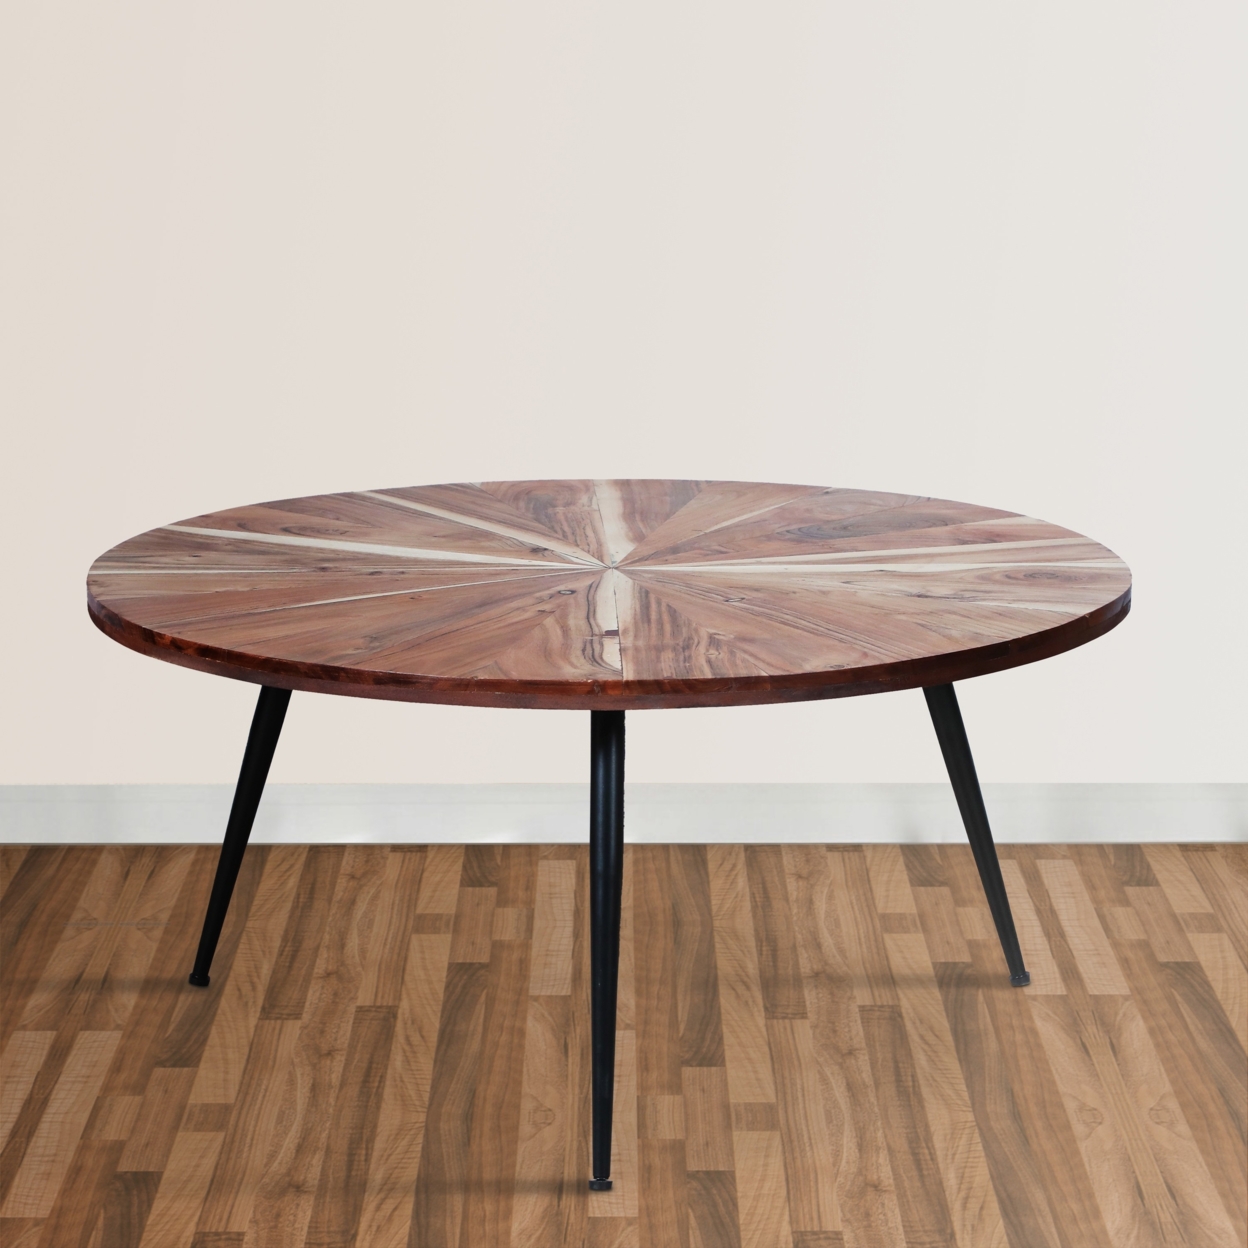 31 Inch Round Mango Wood Coffee Table, Sunburst Design, Tapered Iron Legs, Brown, Black- Saltoro Sherpi